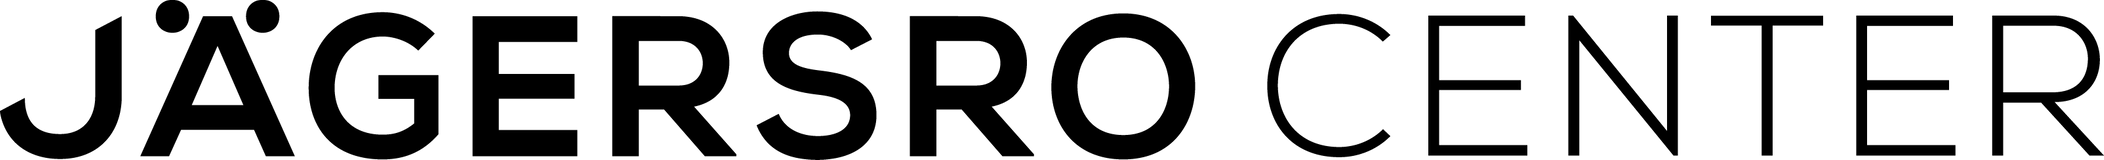 JagersroCenter_logo